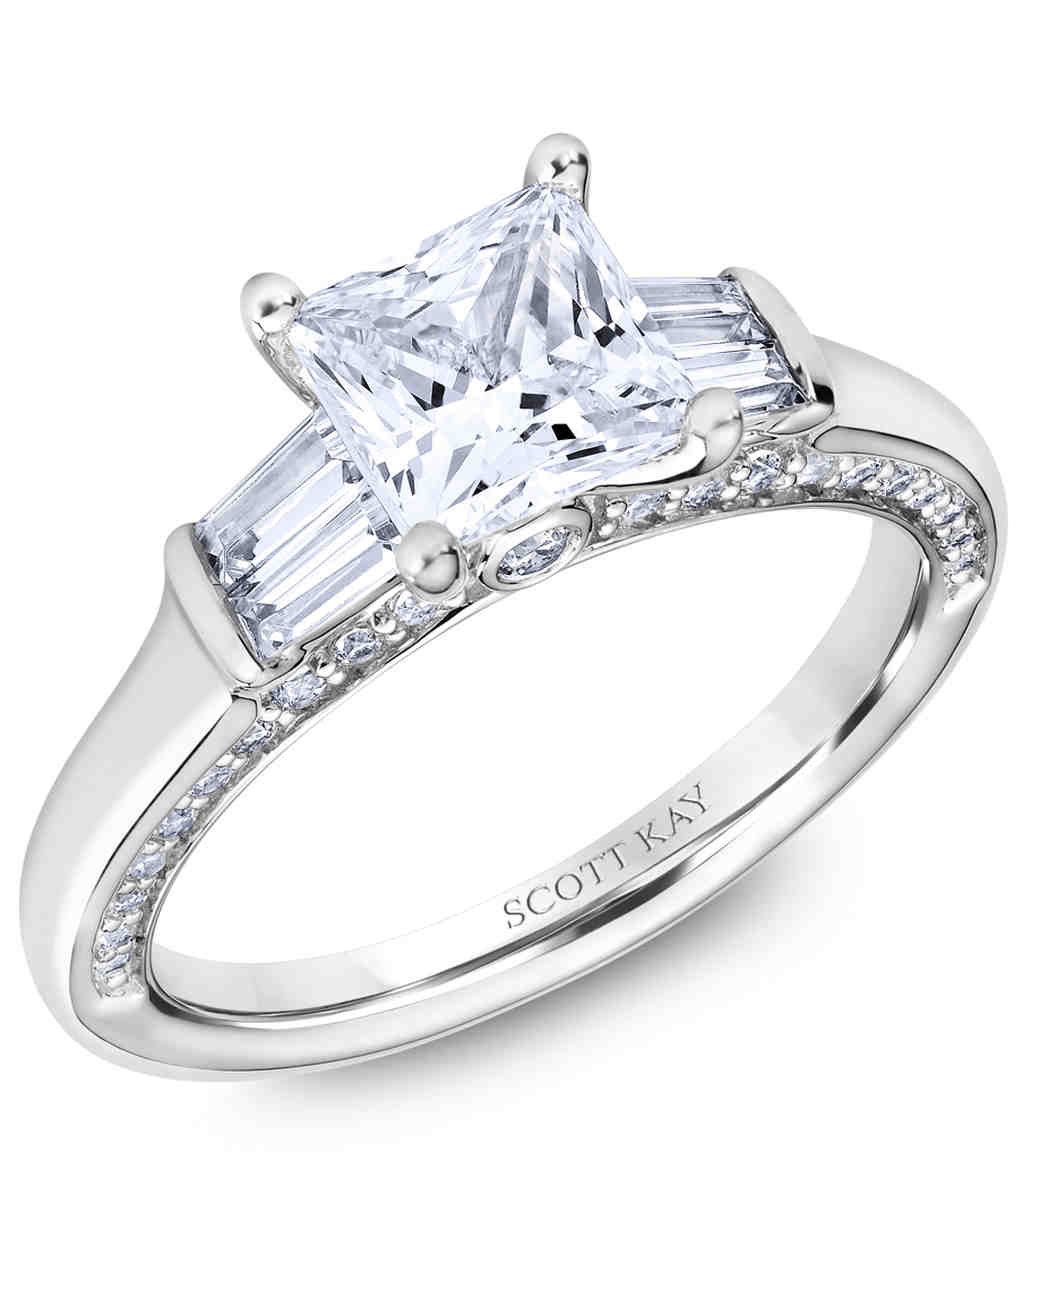 Princess Cut Engagement Ring
 30 Princess Cut Diamond Engagement Rings We Love